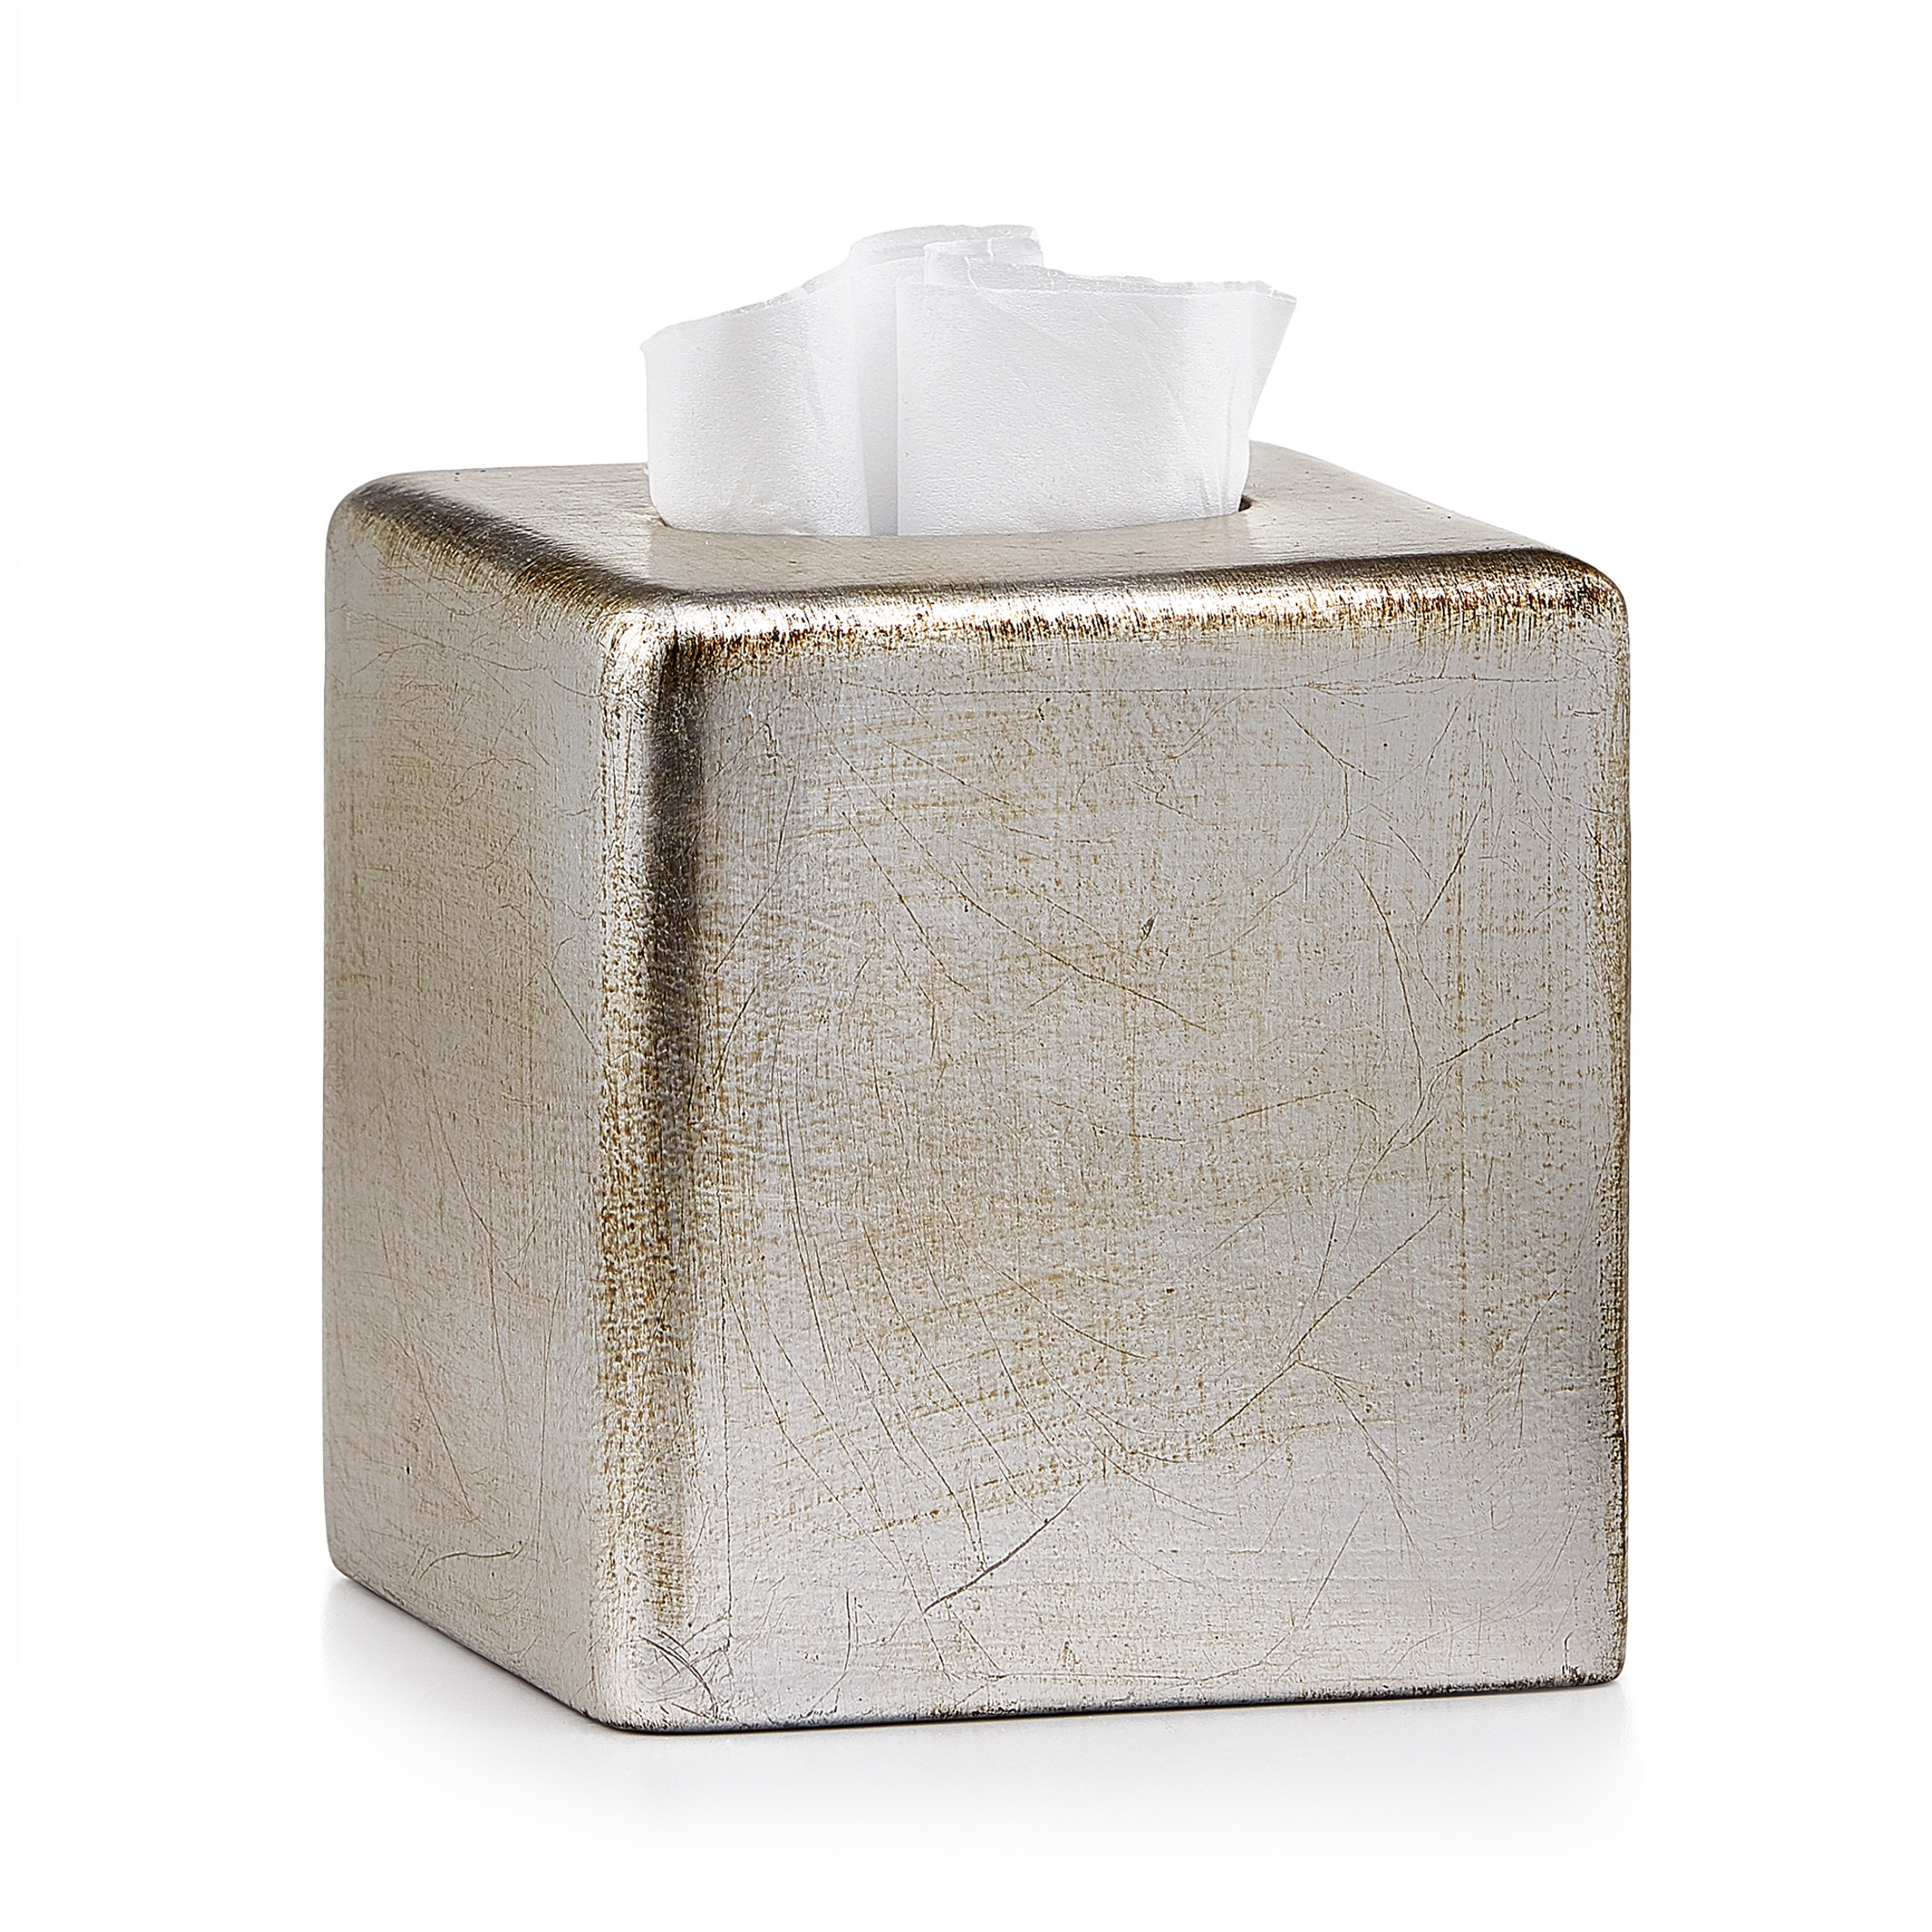 SPRINGS GLOBAL Ceramic Tissue Box Cover IVORY SILVER Elegant Ornate Decor  R17